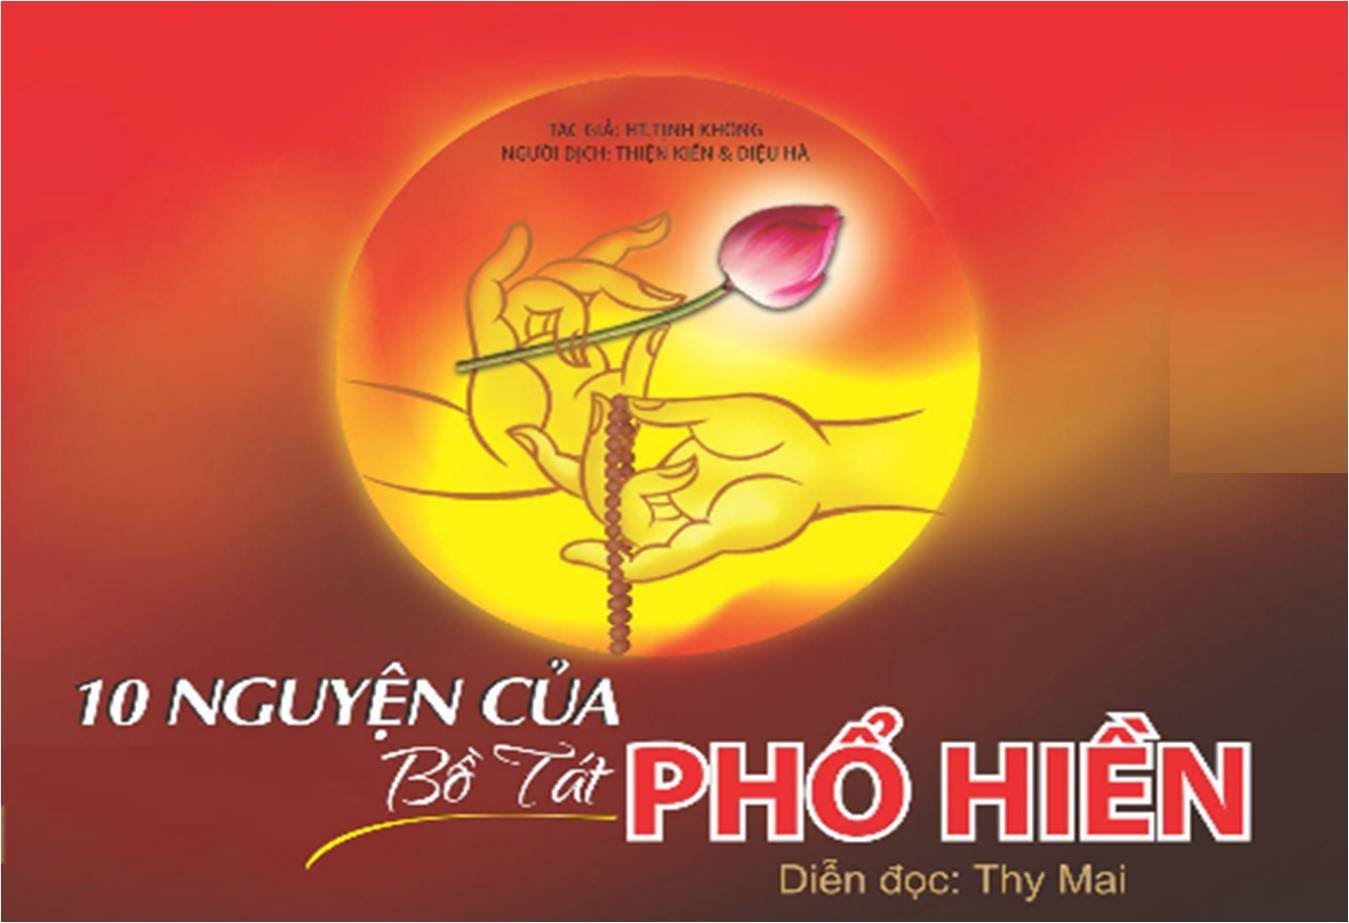 10 nguyen cua Pho Hien Bo Tat